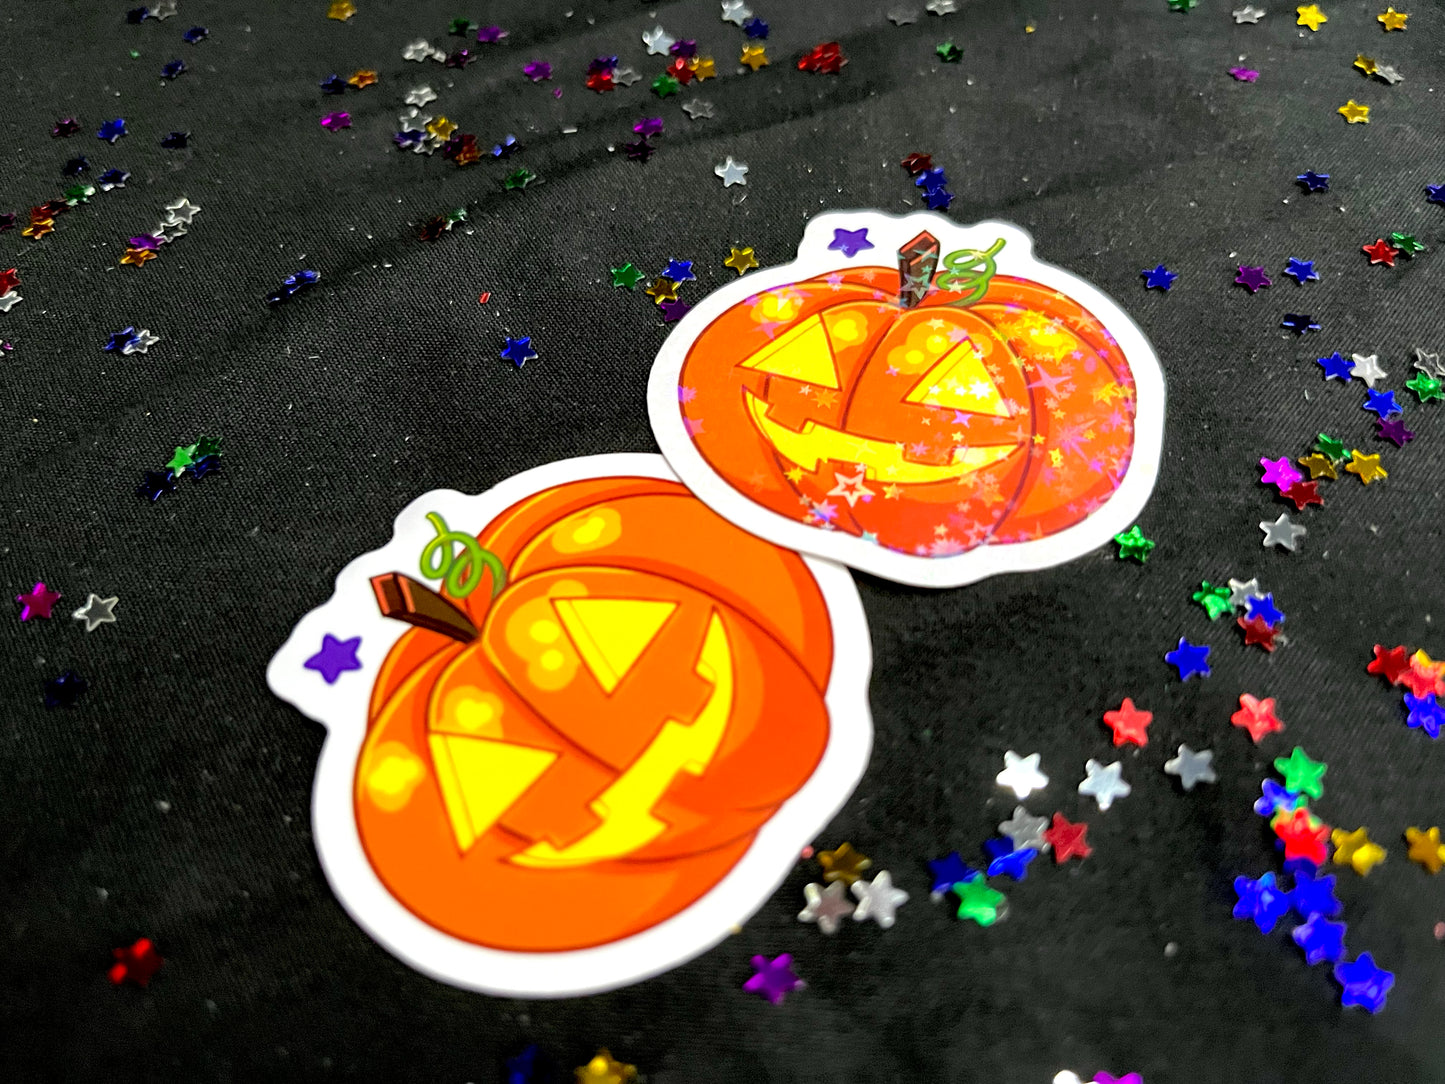 Happy Jack-o-lantern Sticker